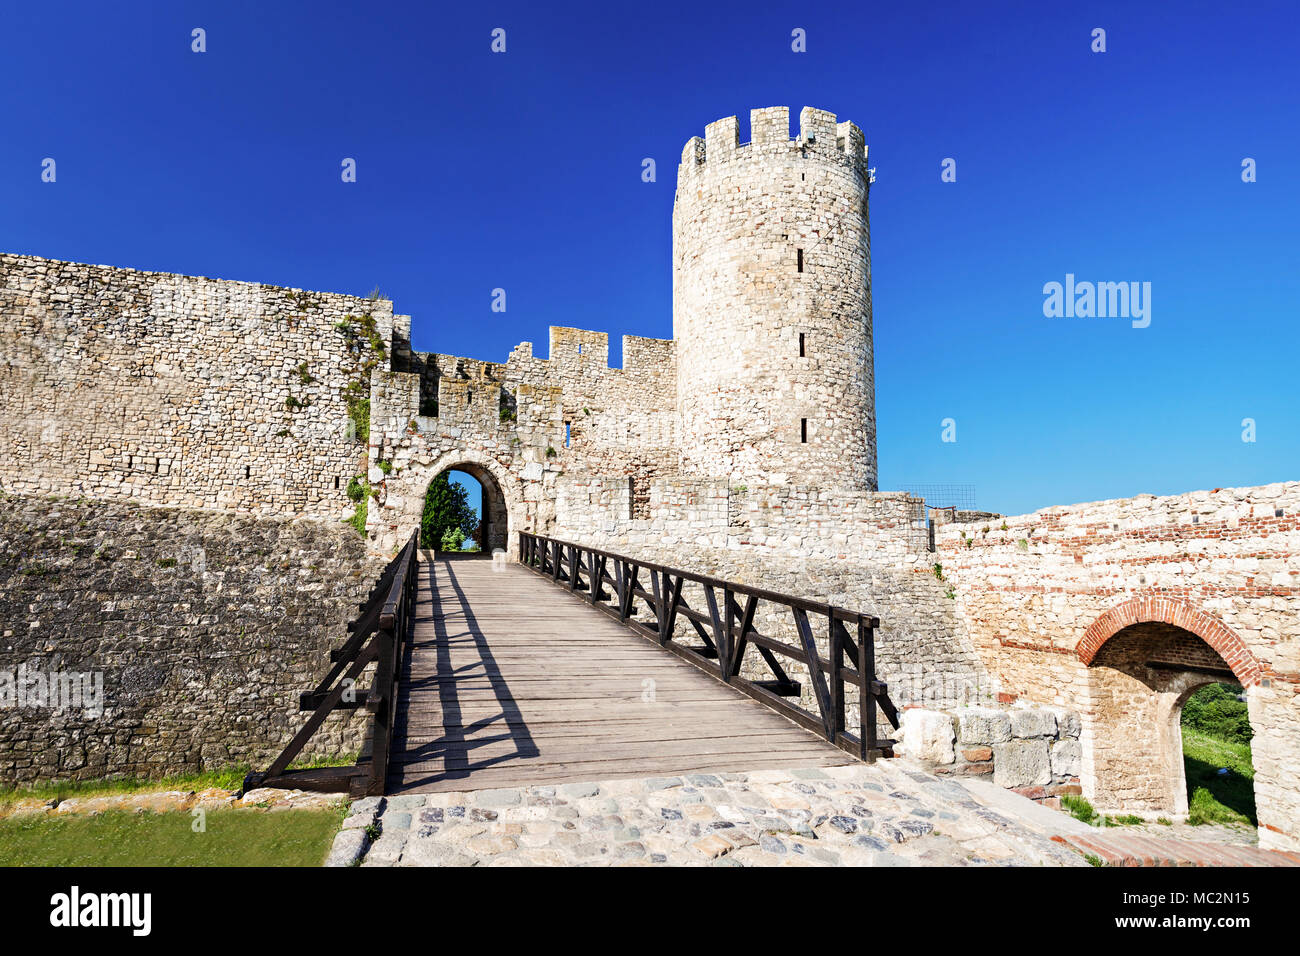 Kalemegdan - very old fortress in Belgrade, Serbia Stock Photo